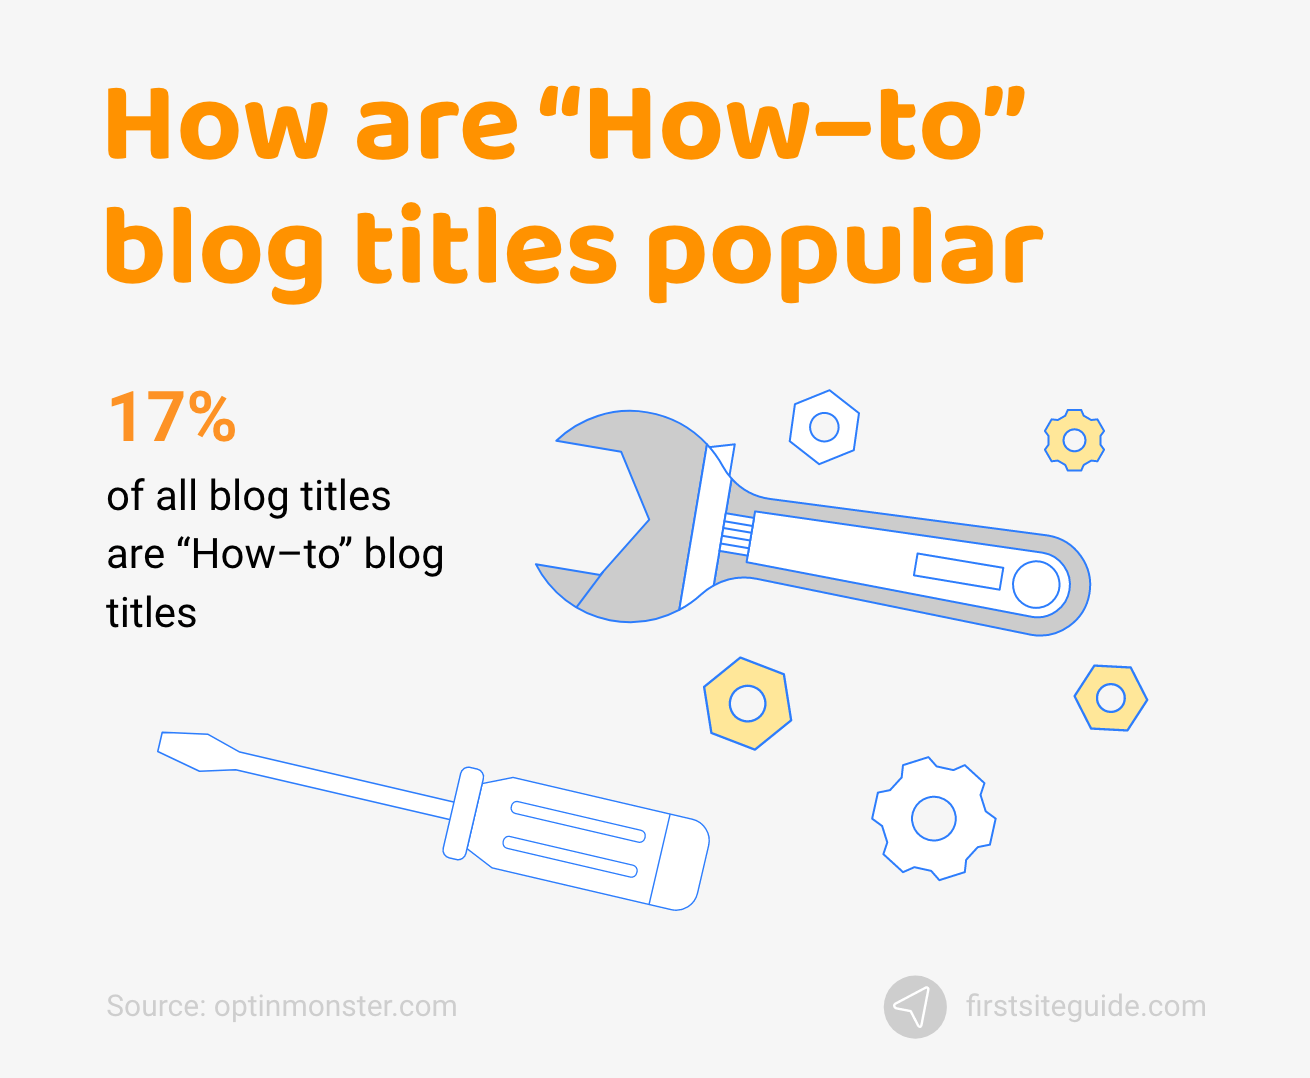 Cum sunt populare titlurile de blog „How-to”